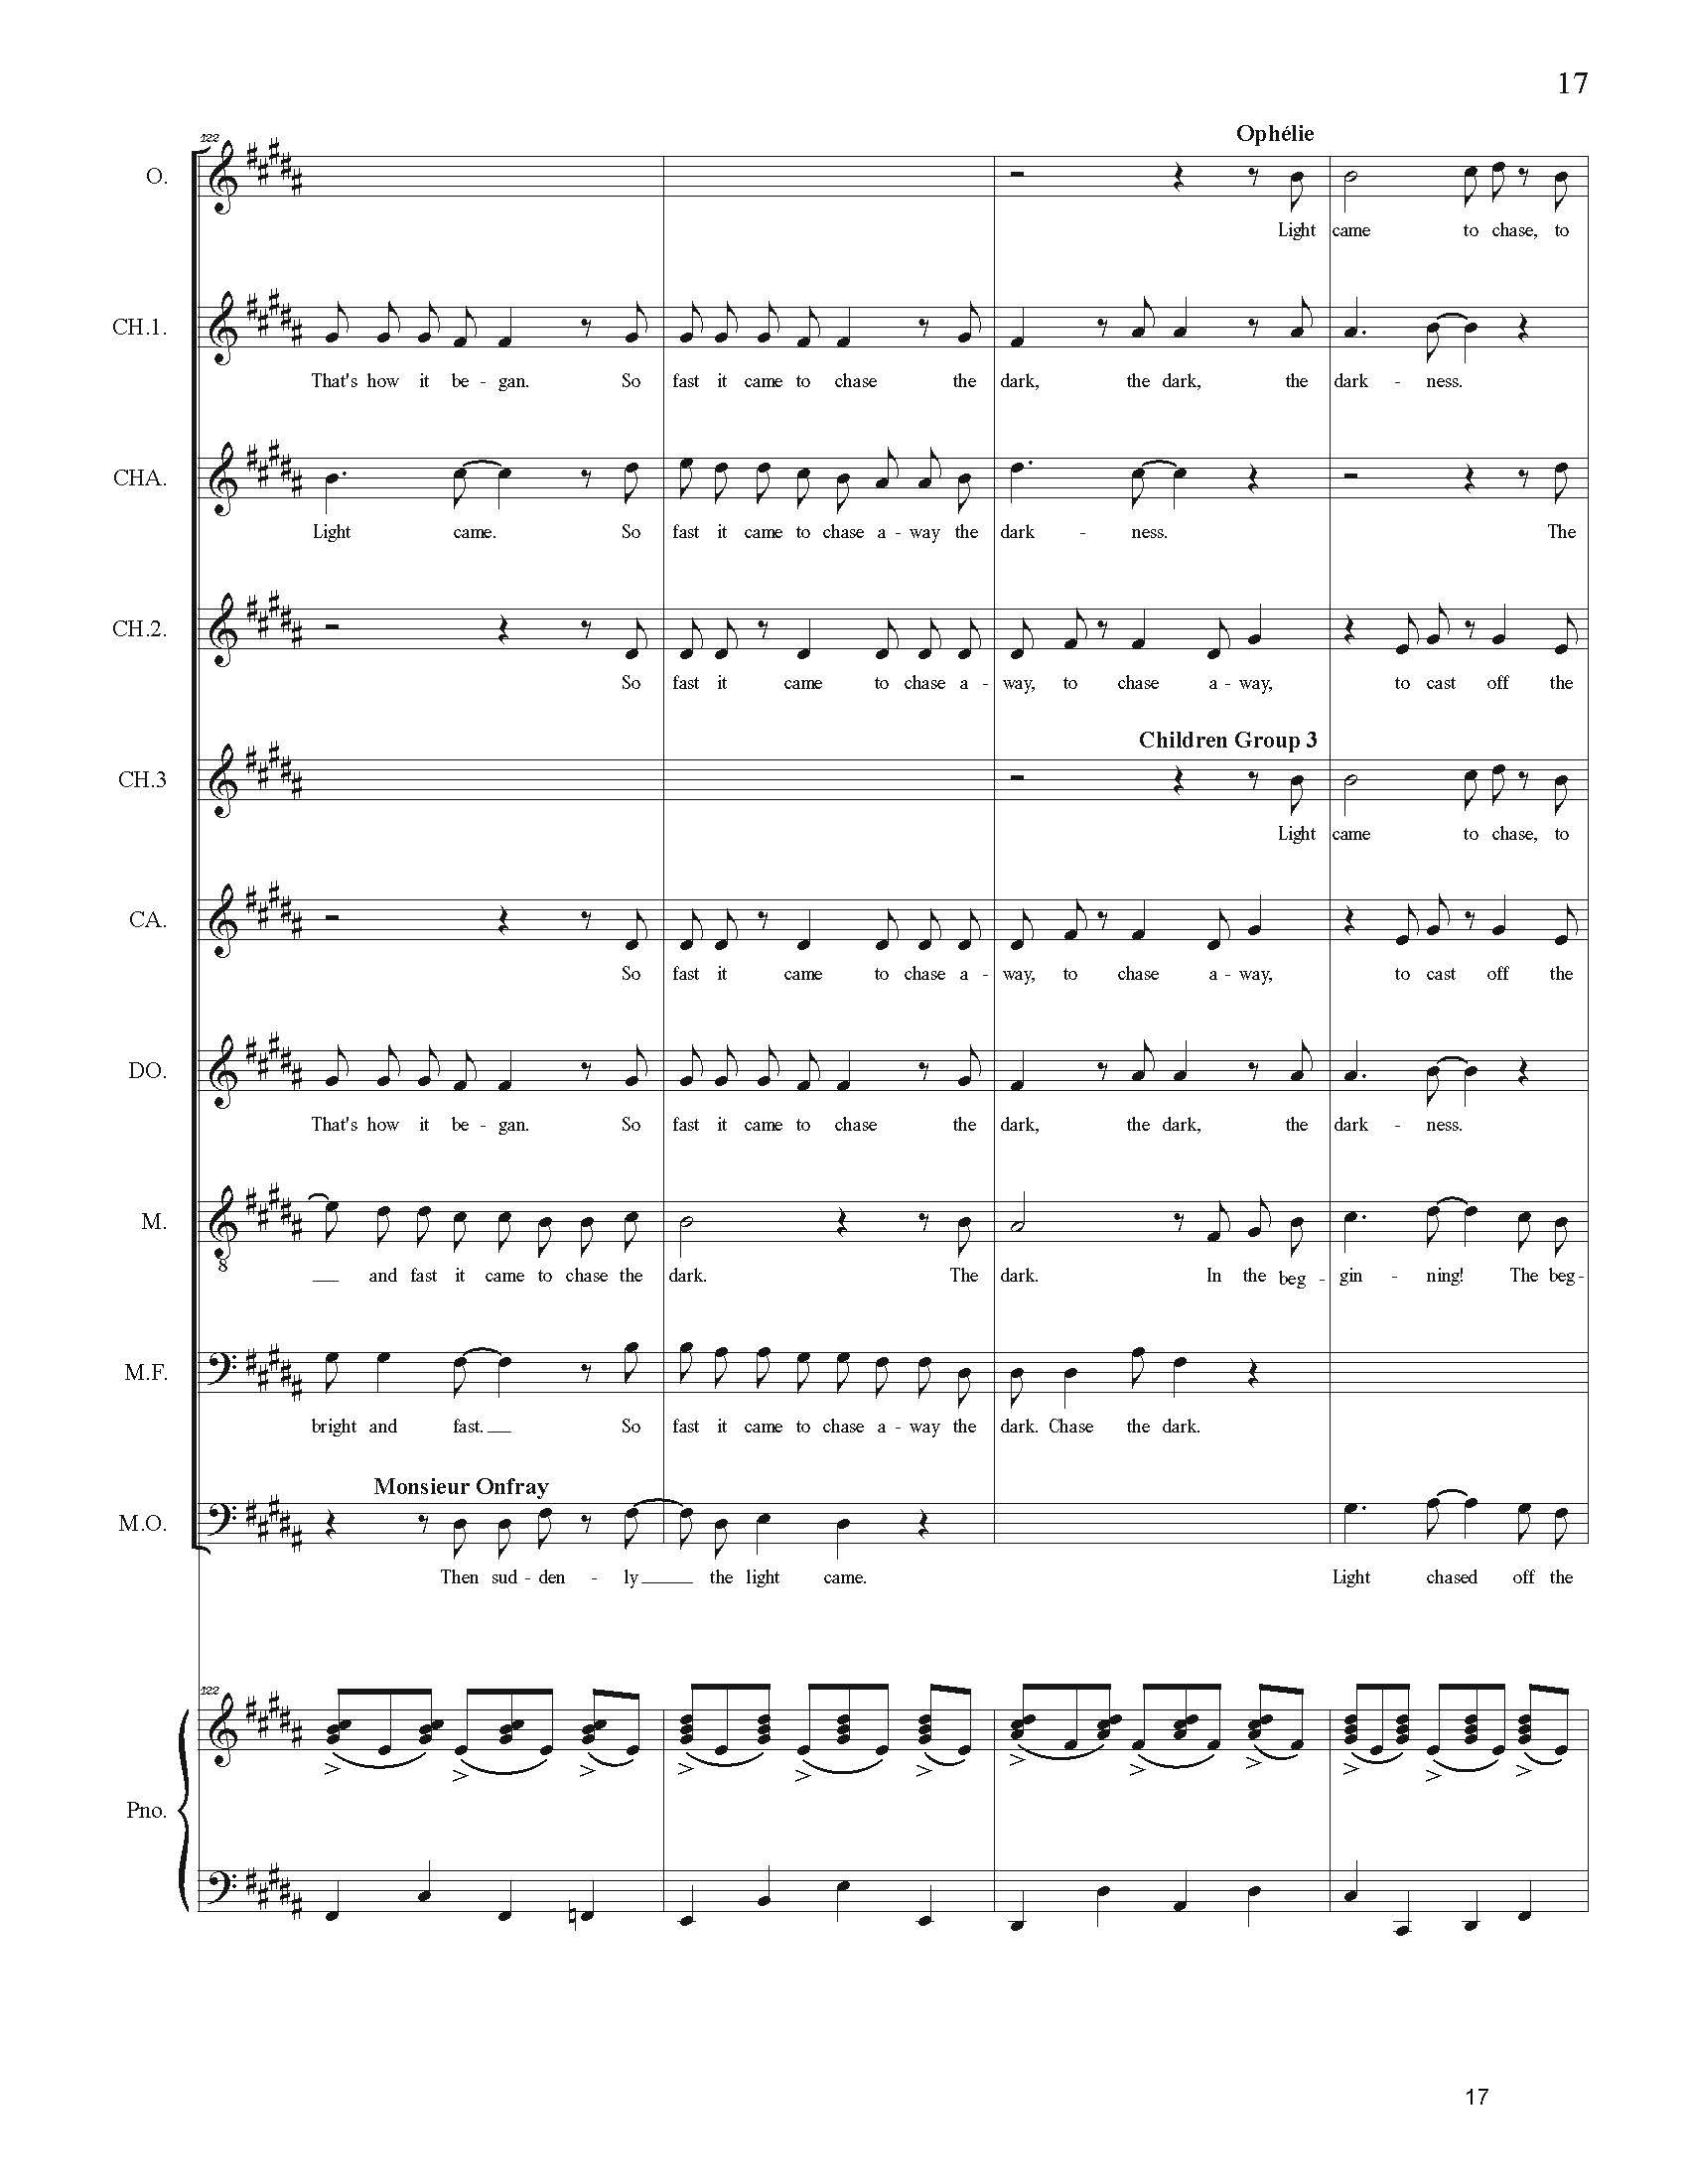 FULL PIANO VOCAL SCORE DRAFT 1 - Score_Page_017.jpg